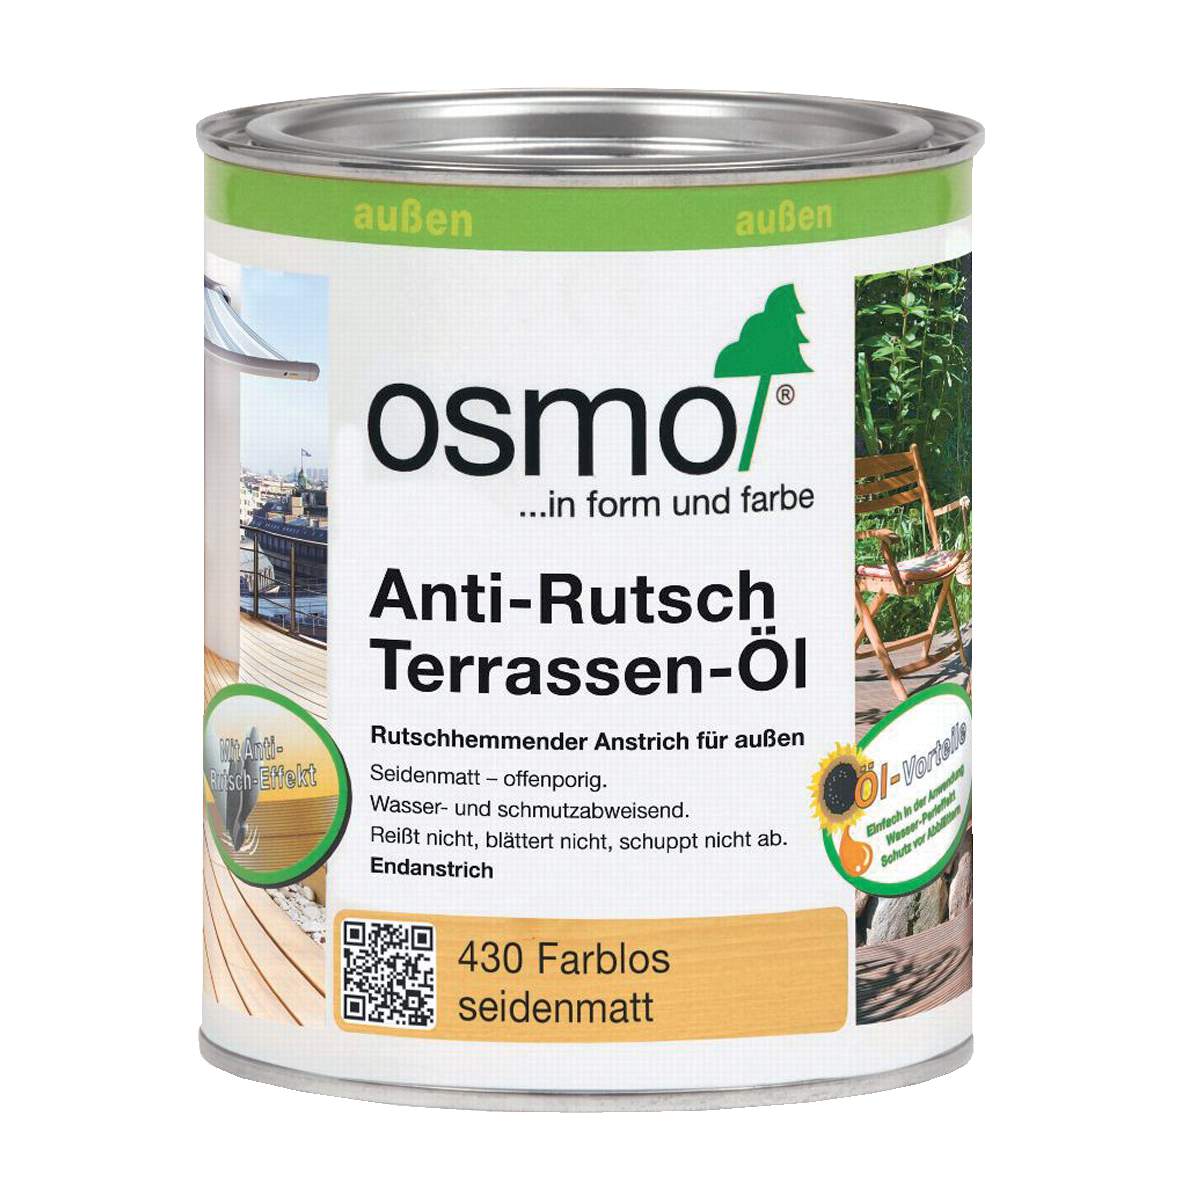 1198199 - Anti-Rutsch Terrassen-Öl